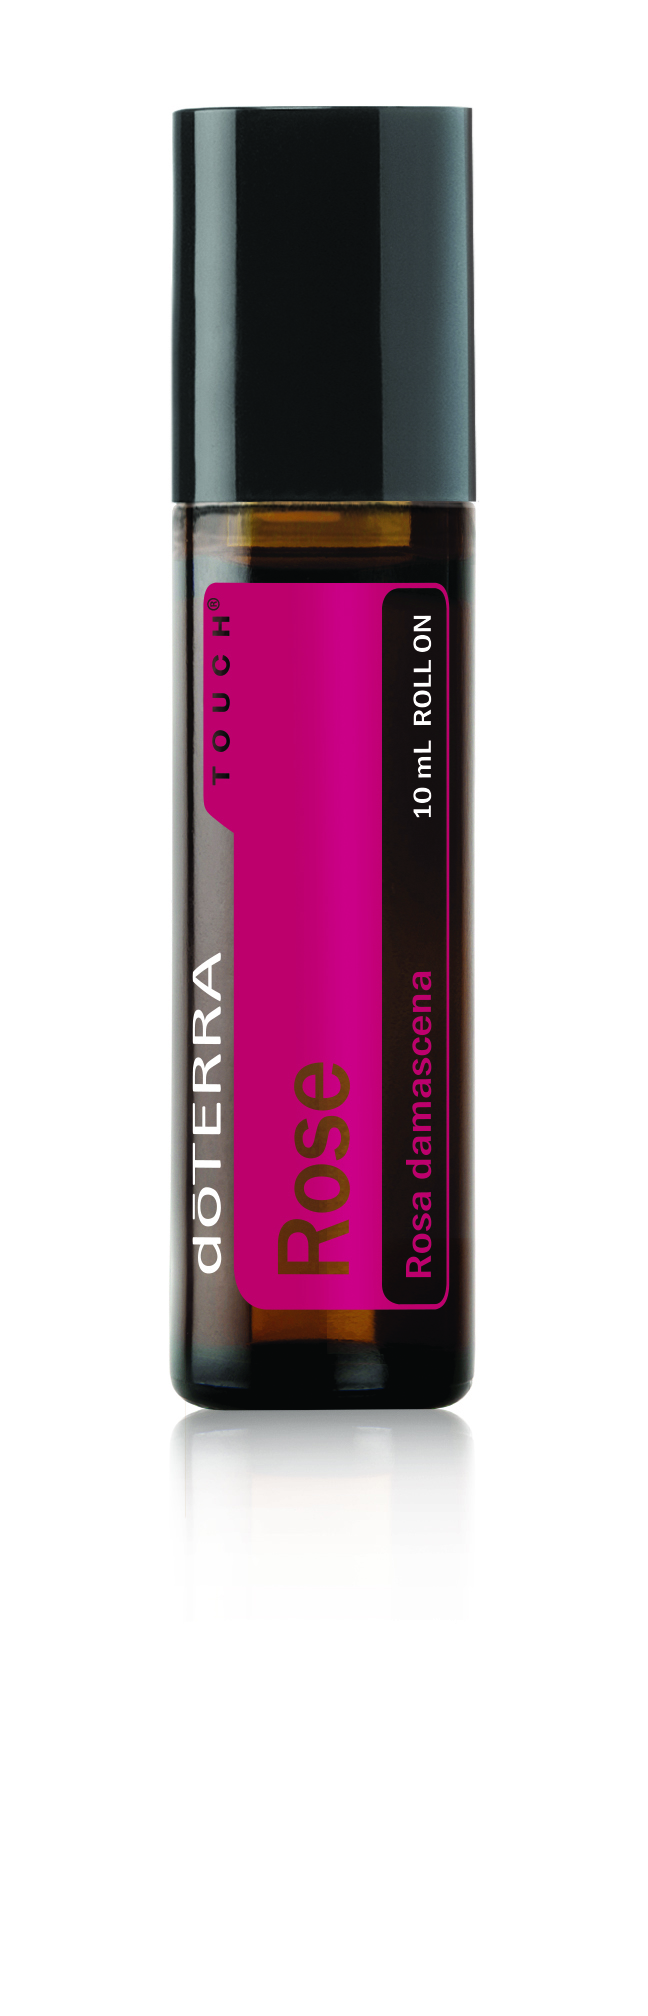 doTERRA Touch Rose Oil | dōTERRA Essential Oils